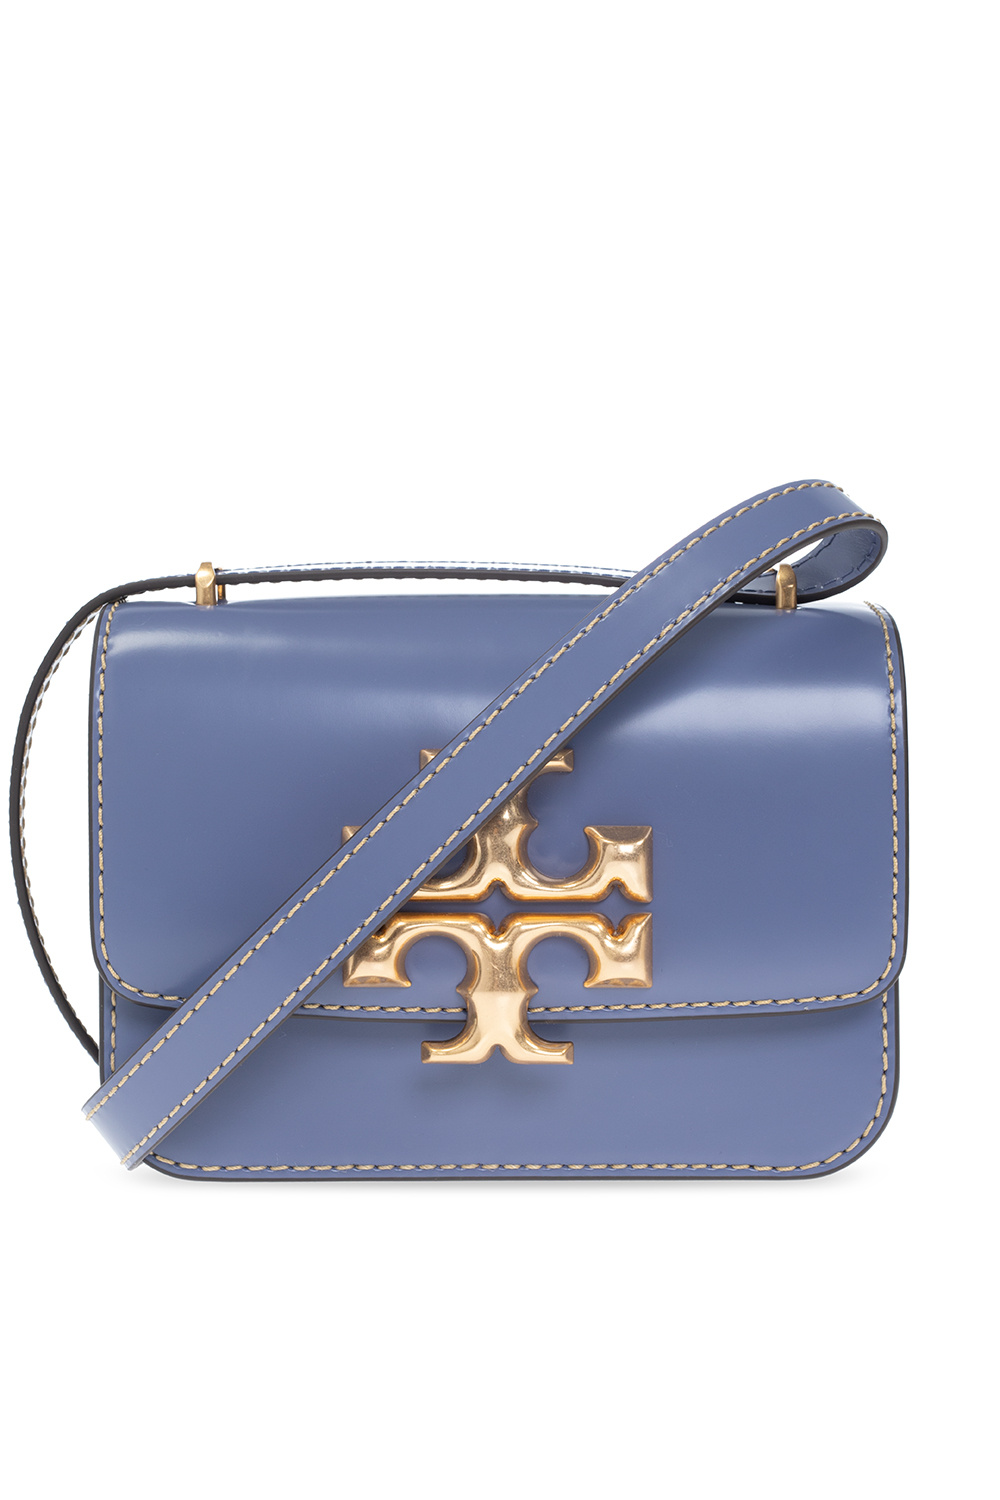 Tory Burch 'Eleanor Small' leather shoulder bag | Women's Bags | Vitkac